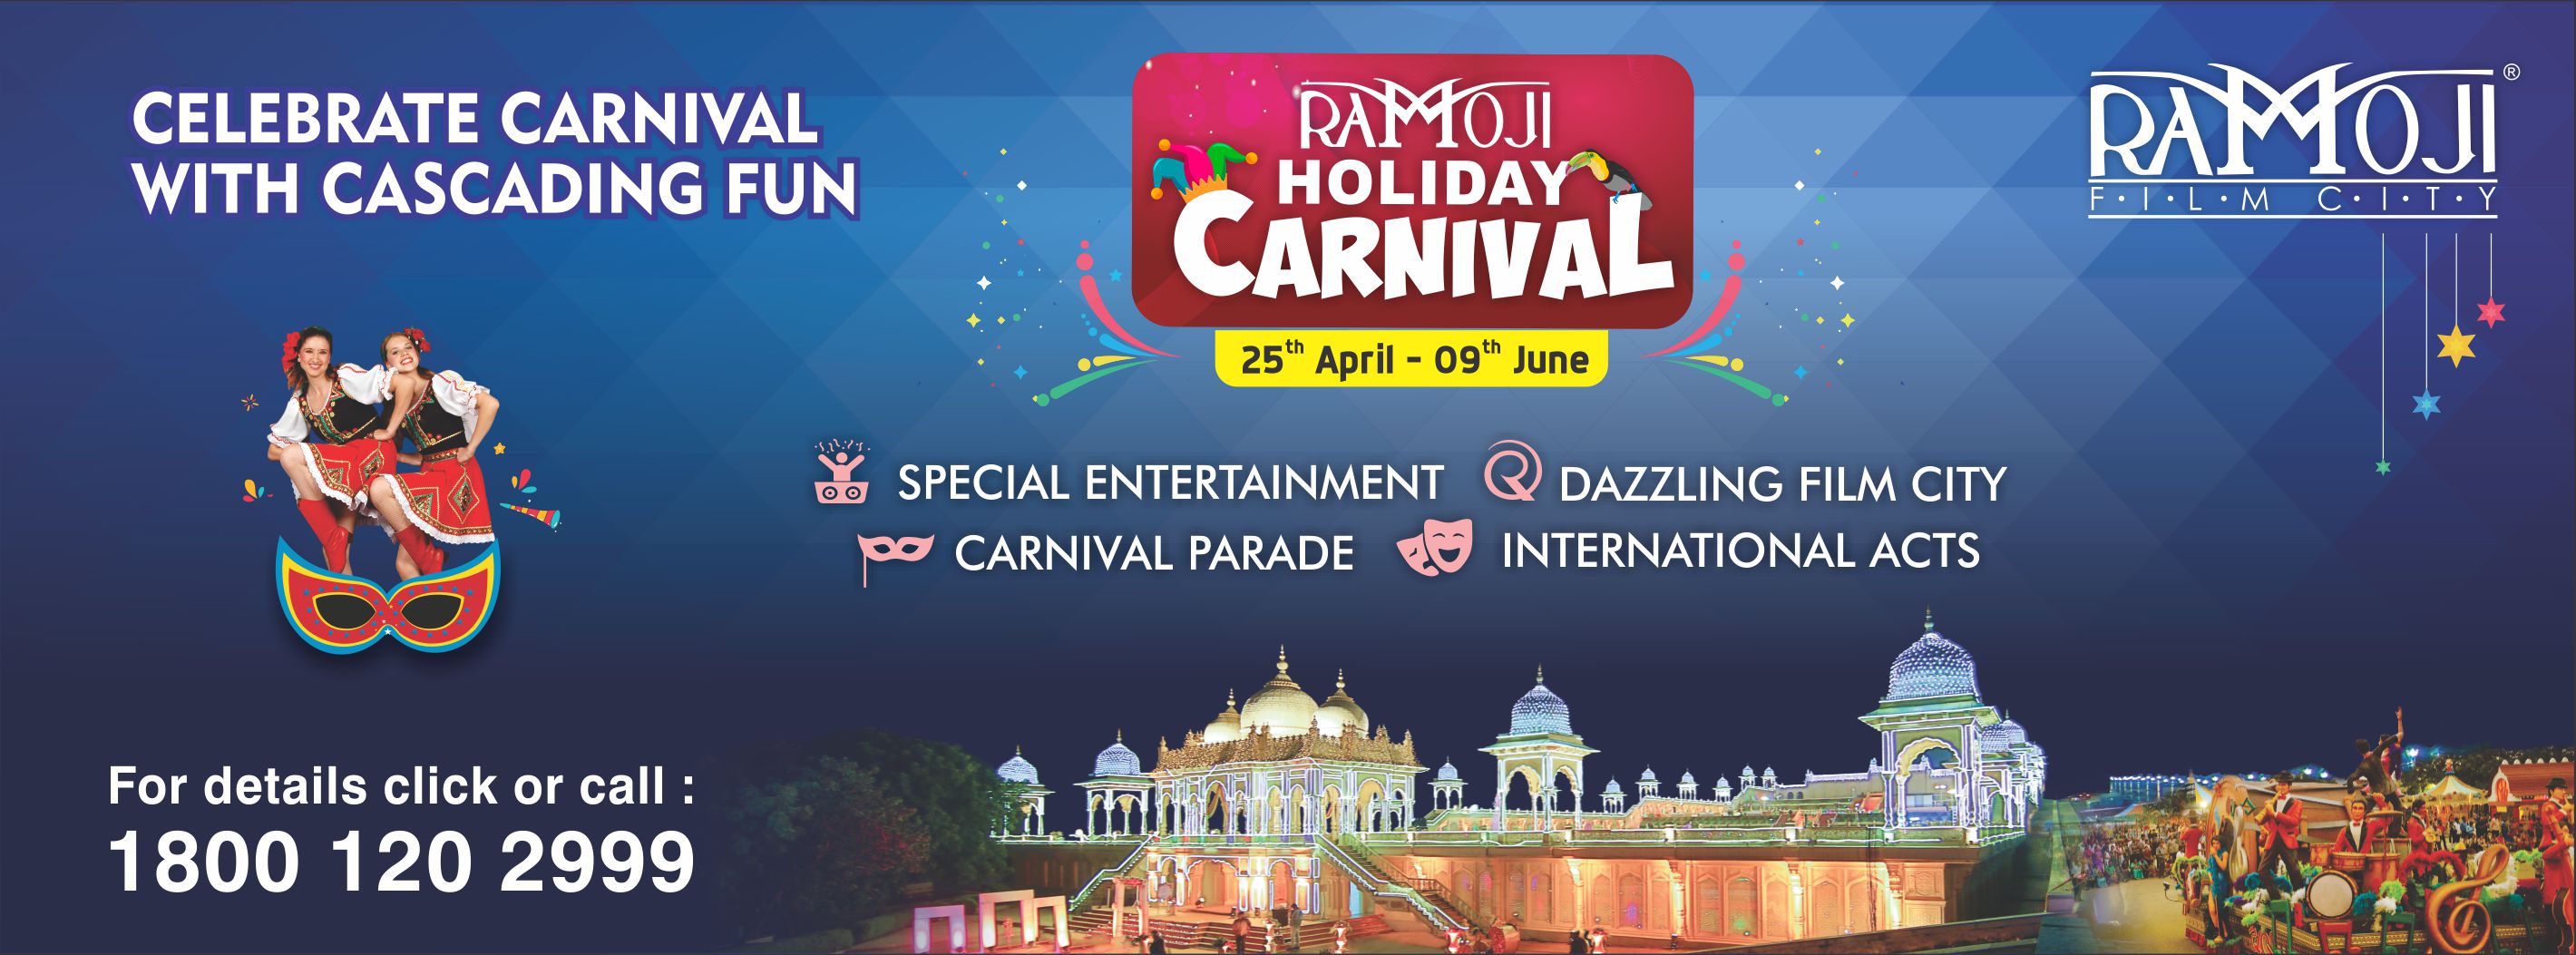 Ramoji Film City Holiday Carnival Celebrations 2019, Hyderabad, Telangana, India